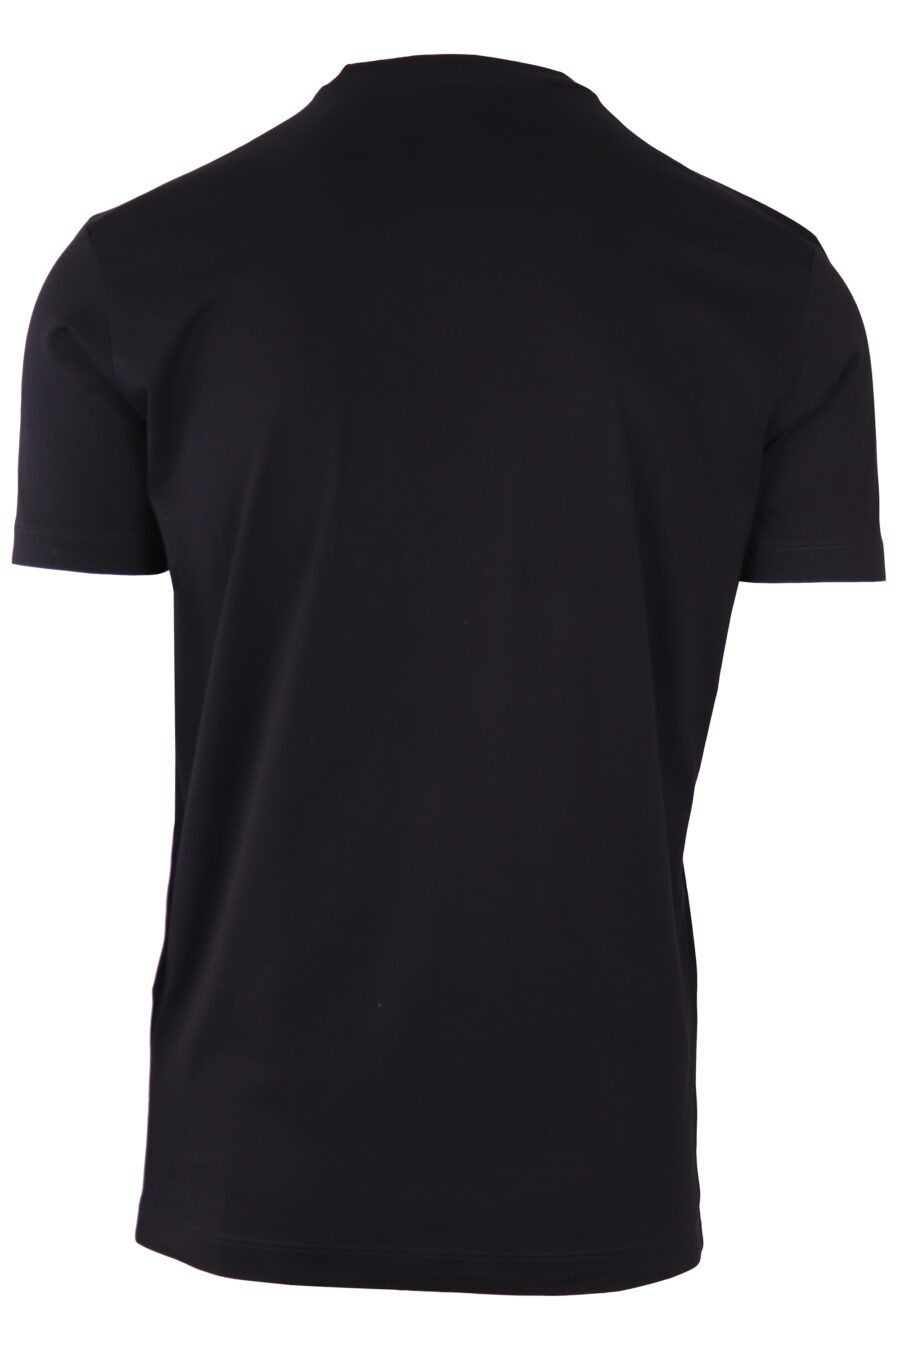 T-shirt black with maxilogo text "dean and dan caten" - IMG 7723